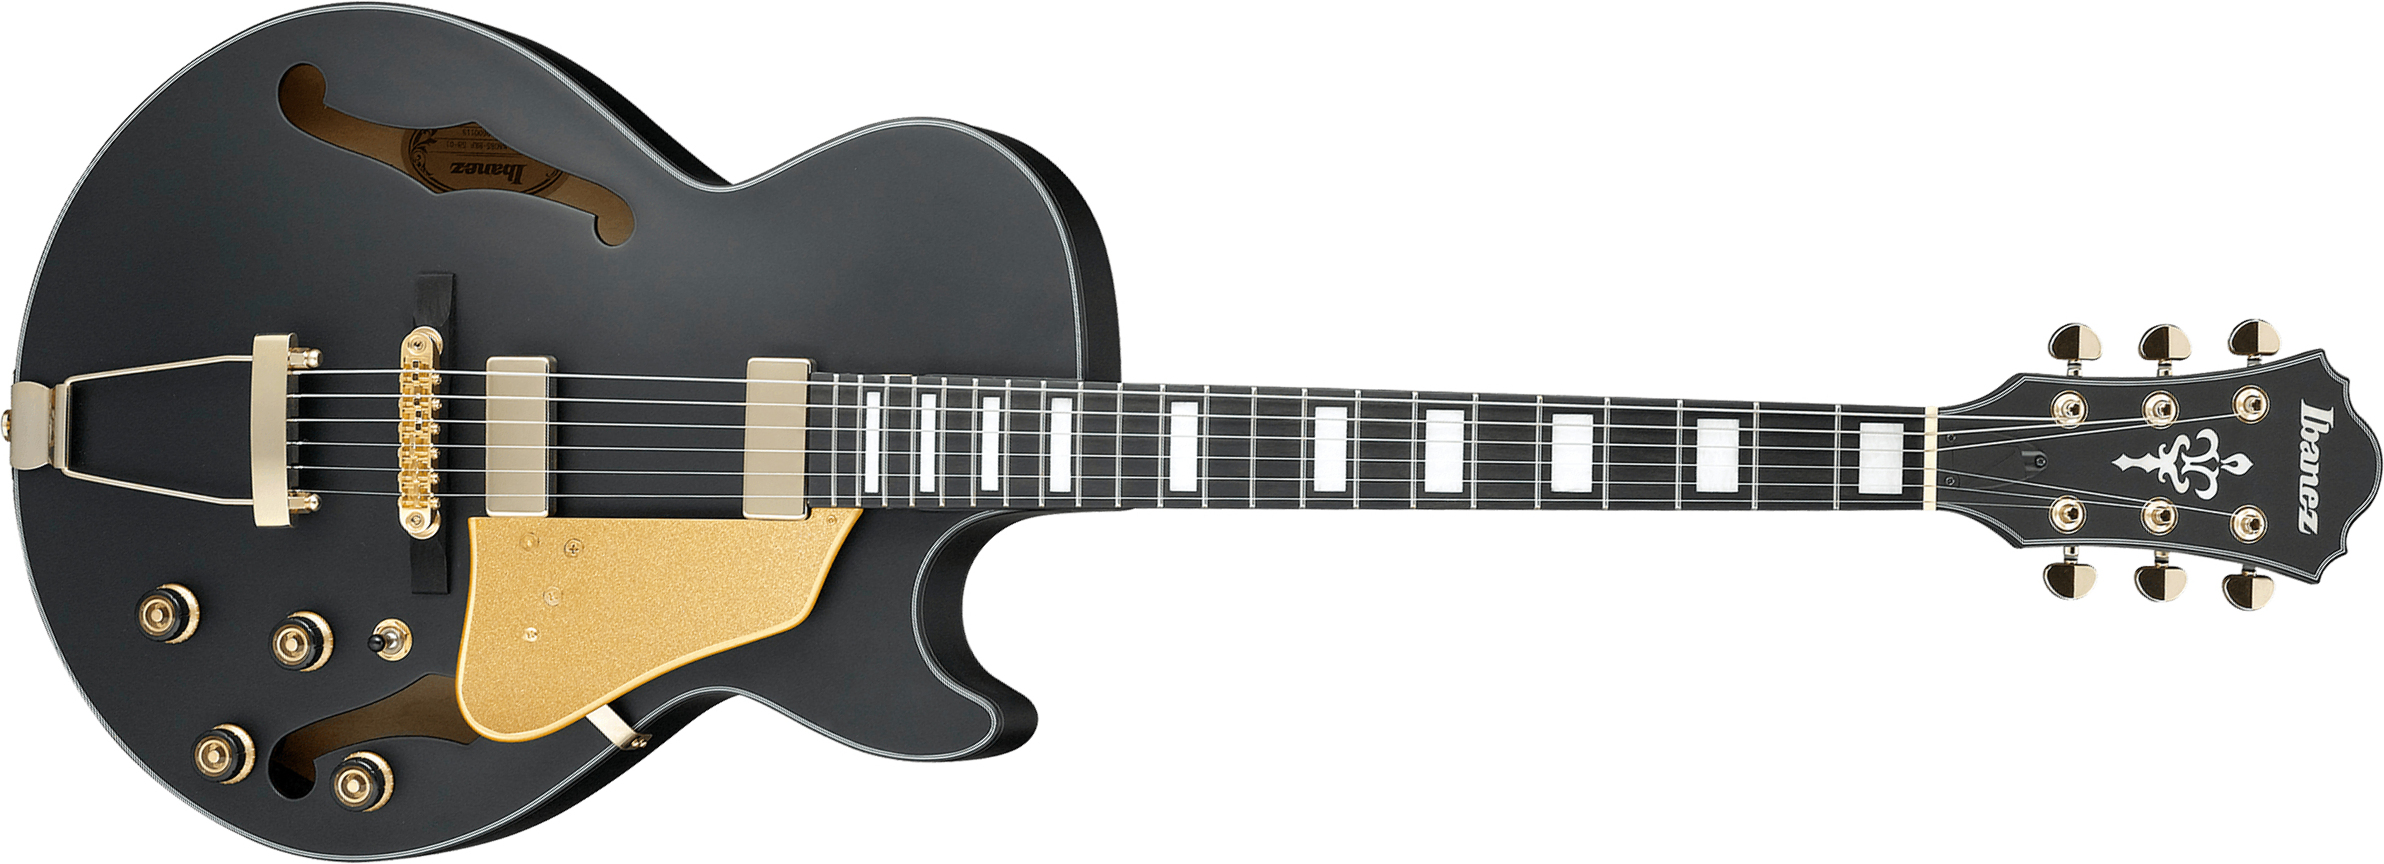 Ibanez Ag85 Bkf Artcore Expressionist Ht Hh Eb - Black Flat - Hollow bodytock elektrische gitaar - Main picture